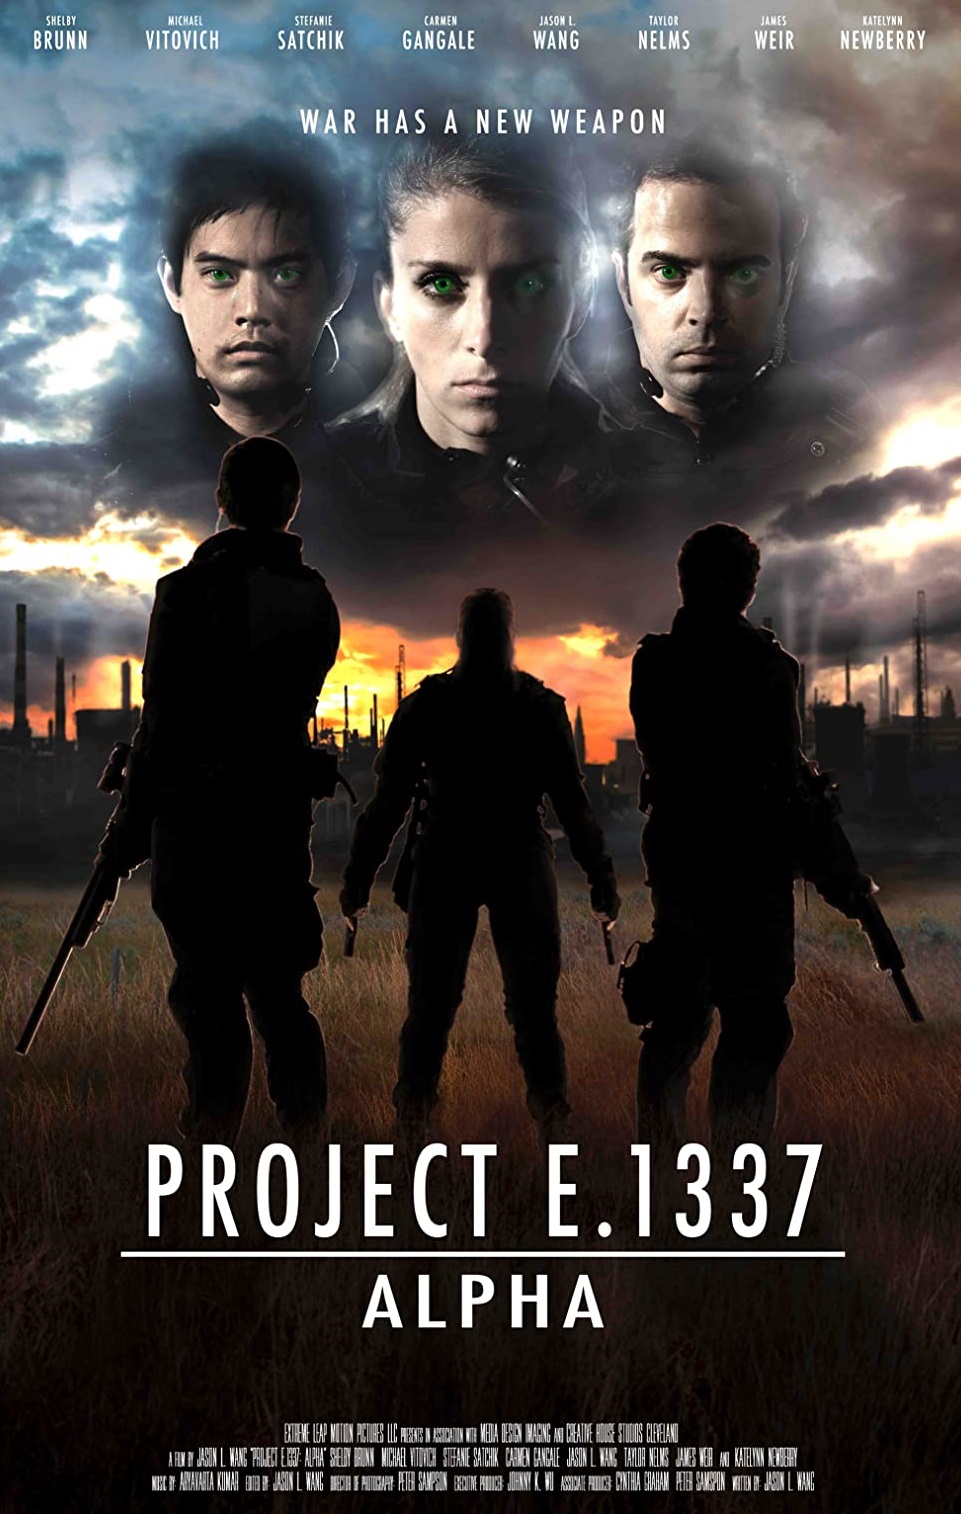 Project E.1337: ALPHA 2022